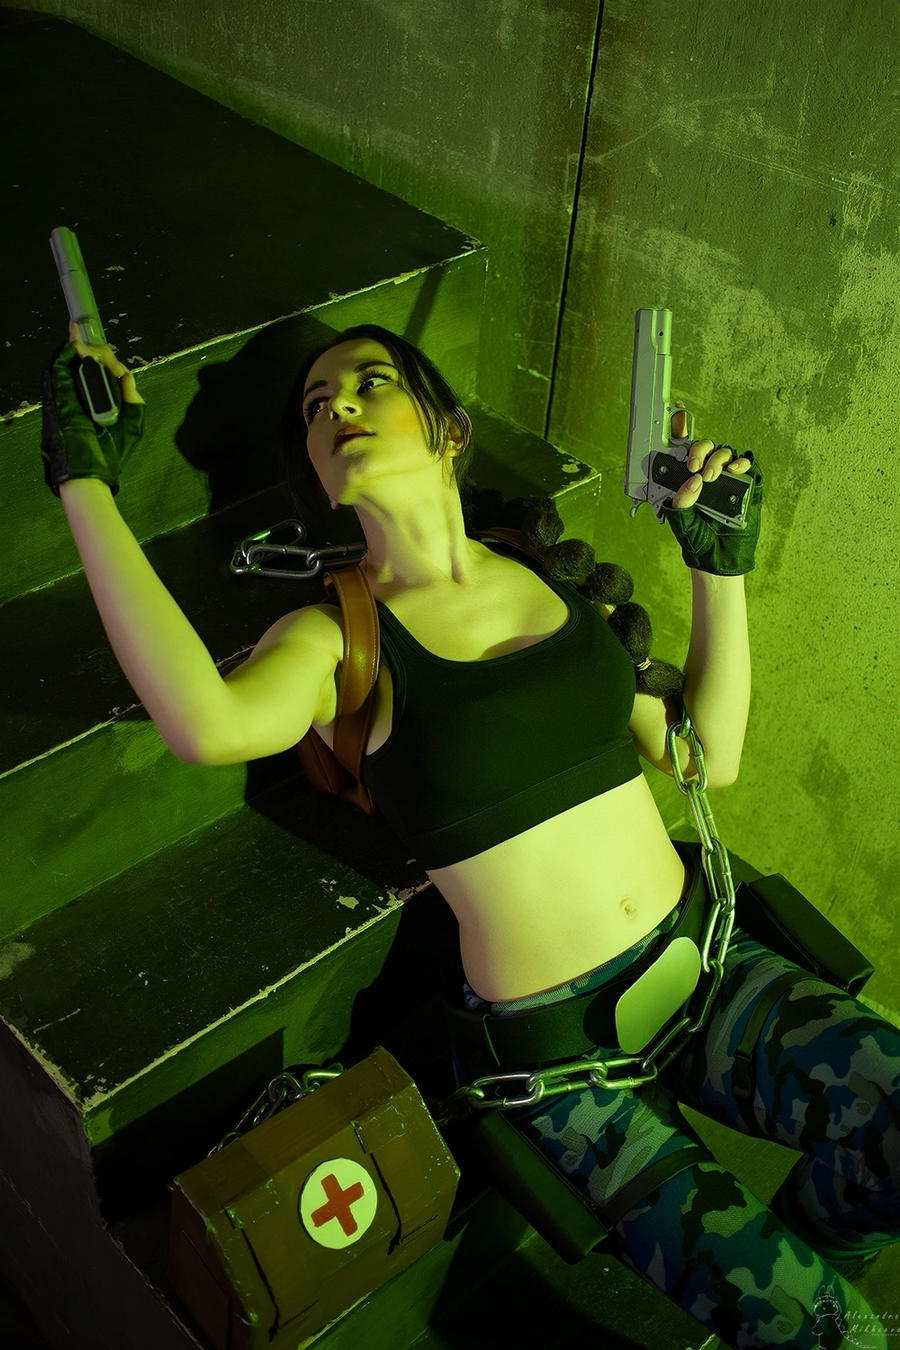 Cosplay Lara Croft by LizkaNovi on DeviantArt